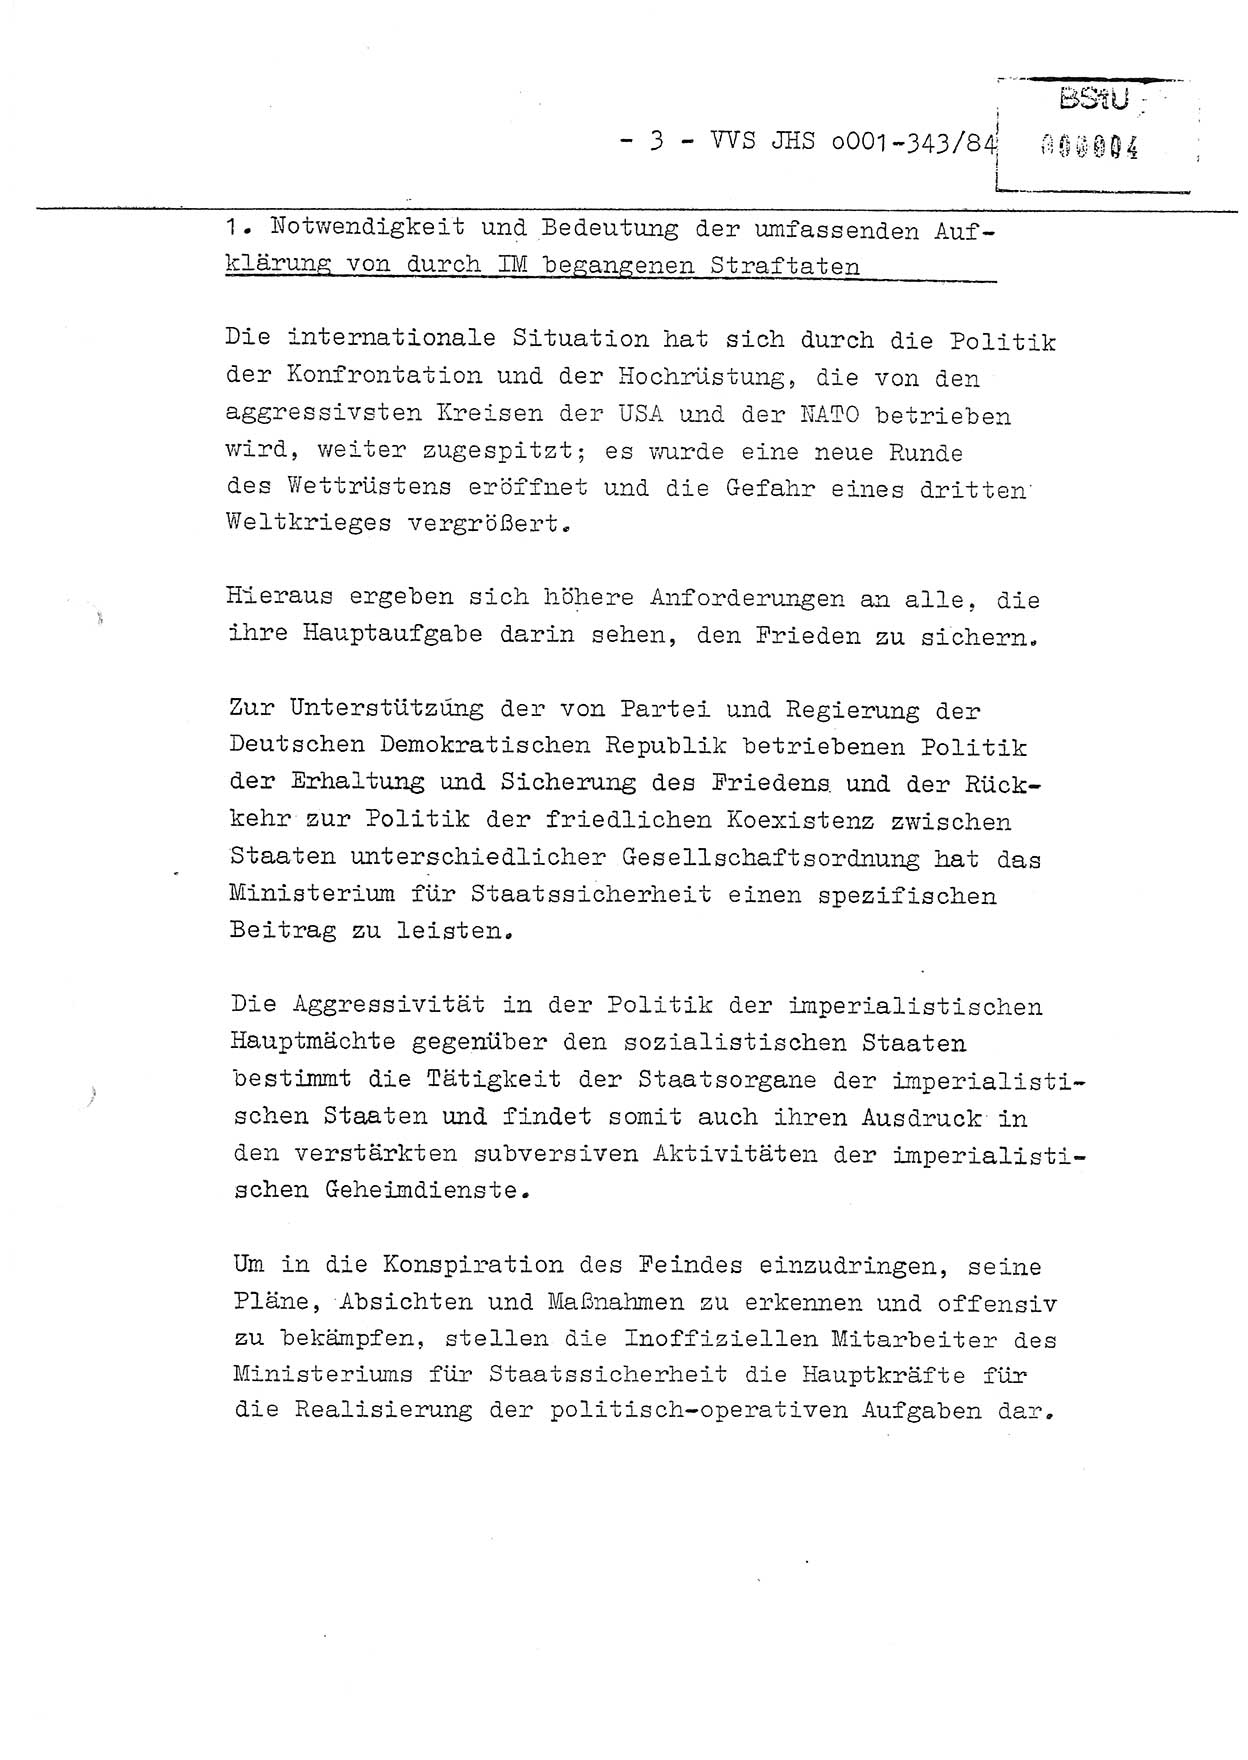 Diplomarbeit, Oberleutnant Bernd Michael (HA Ⅸ/5), Oberleutnant Peter Felber (HA IX/5), Ministerium für Staatssicherheit (MfS) [Deutsche Demokratische Republik (DDR)], Juristische Hochschule (JHS), Vertrauliche Verschlußsache (VVS) o001-343/84, Potsdam 1985, Seite 3 (Dipl.-Arb. MfS DDR JHS VVS o001-343/84 1985, S. 3)